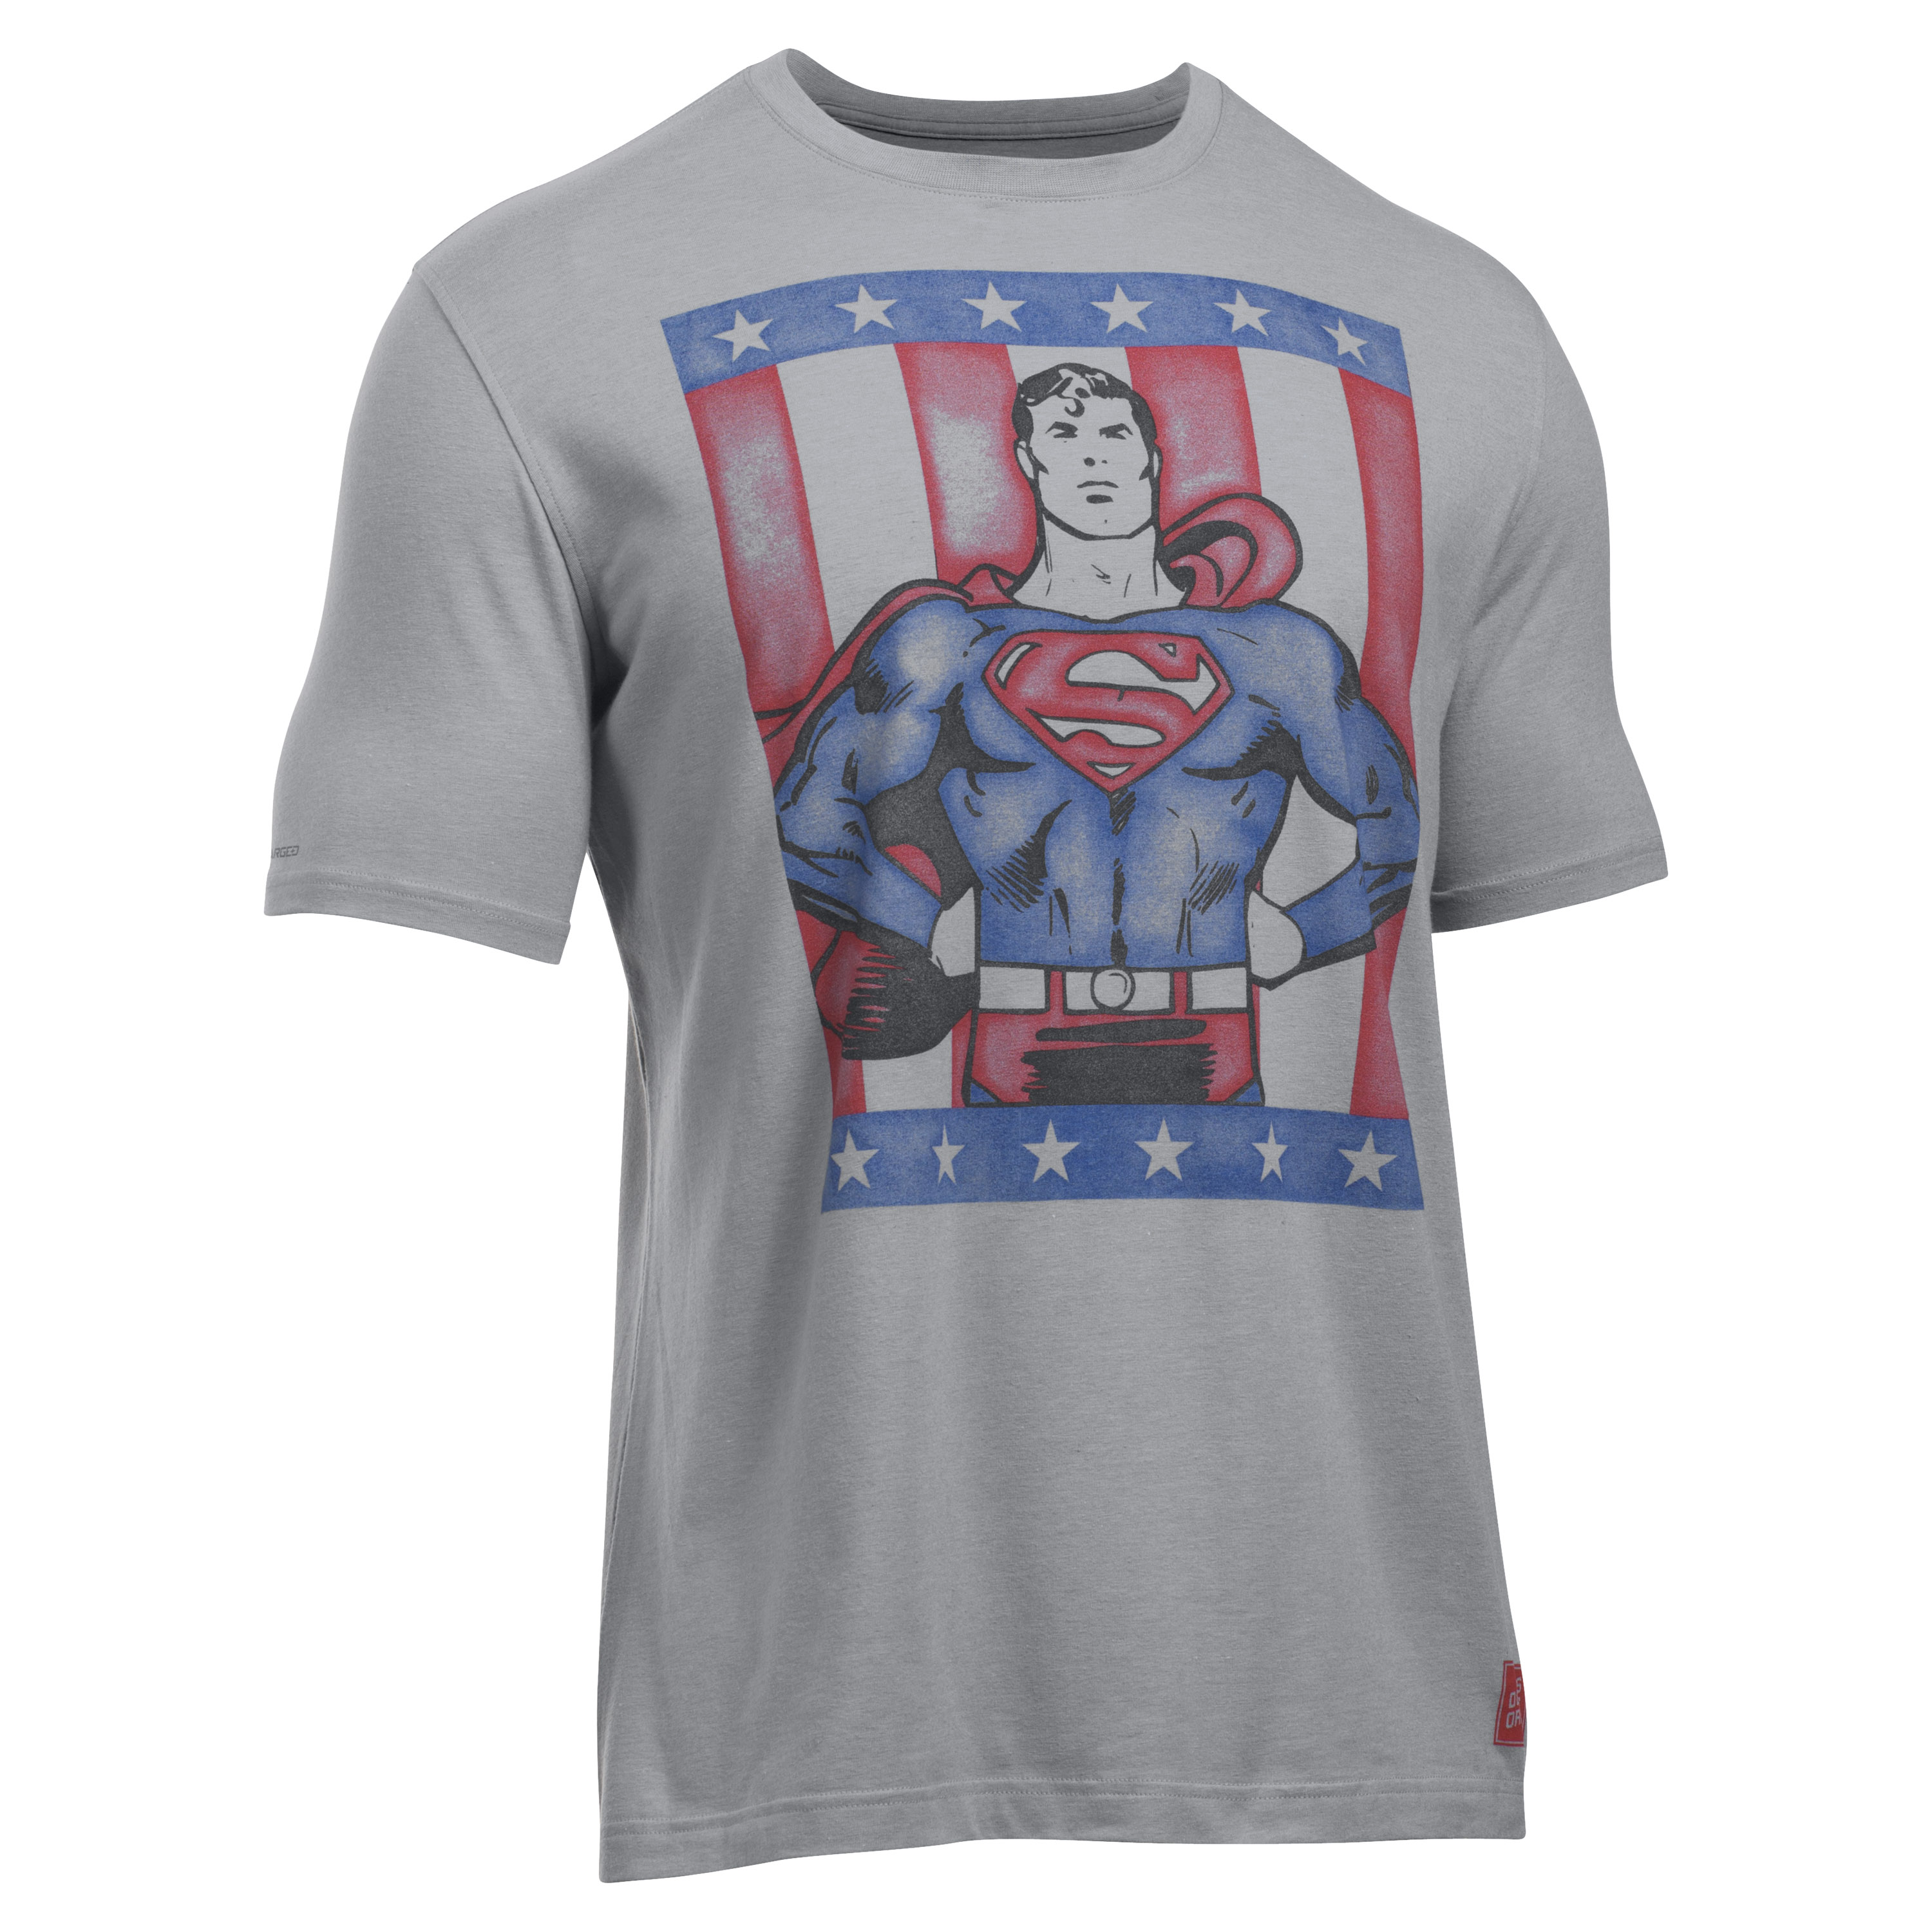 superman under armour shirt